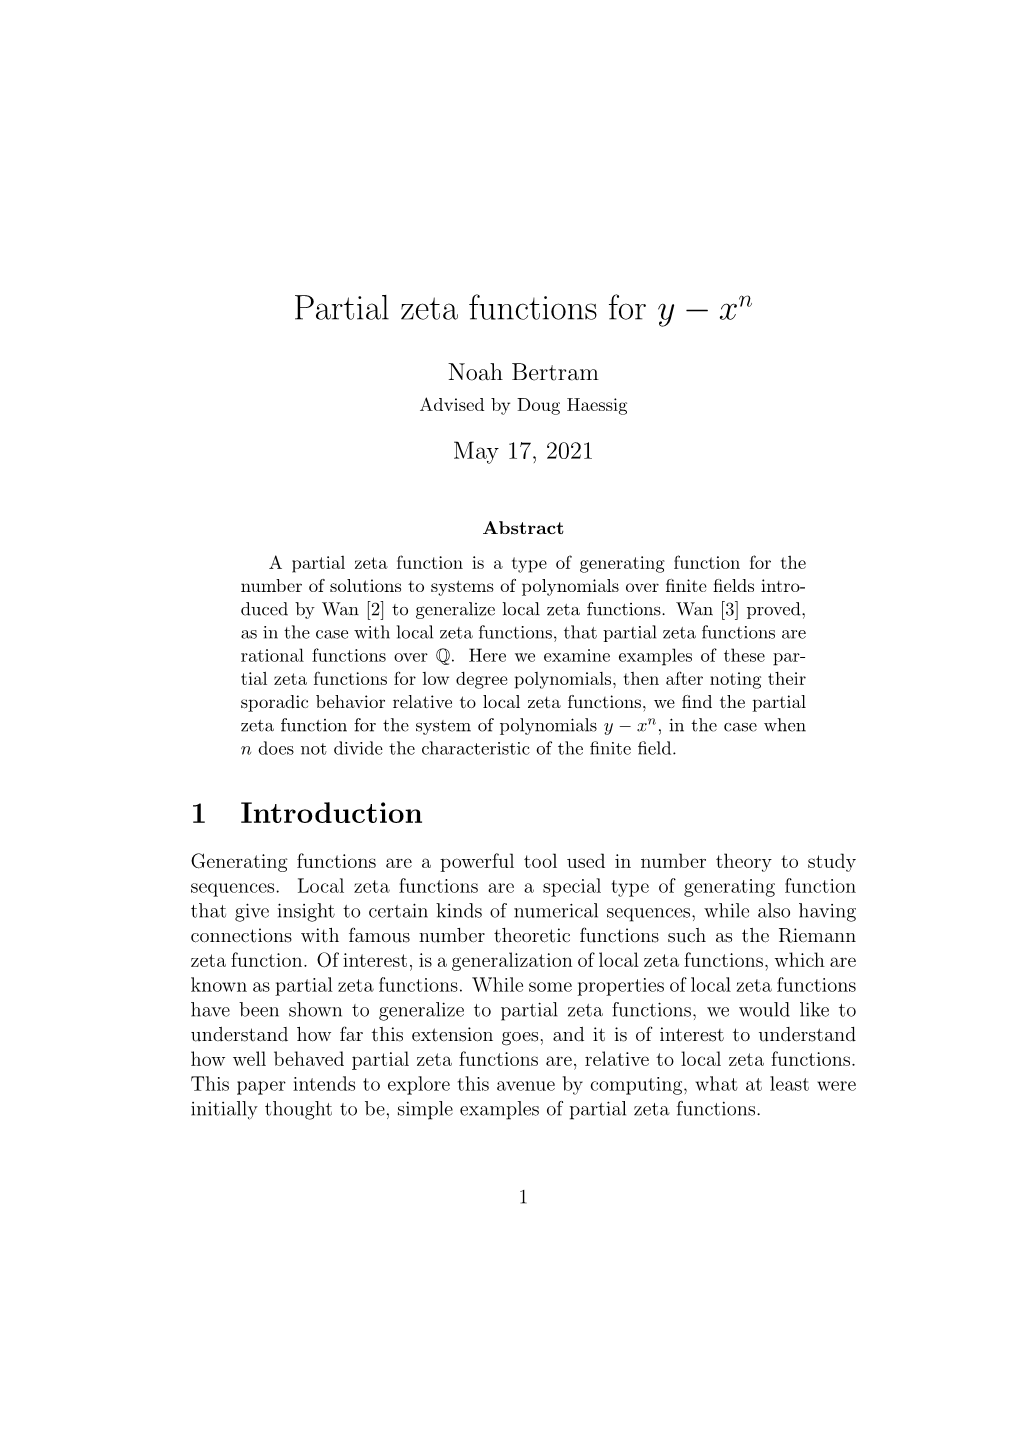 Partial Zeta Functions for Y − Xn